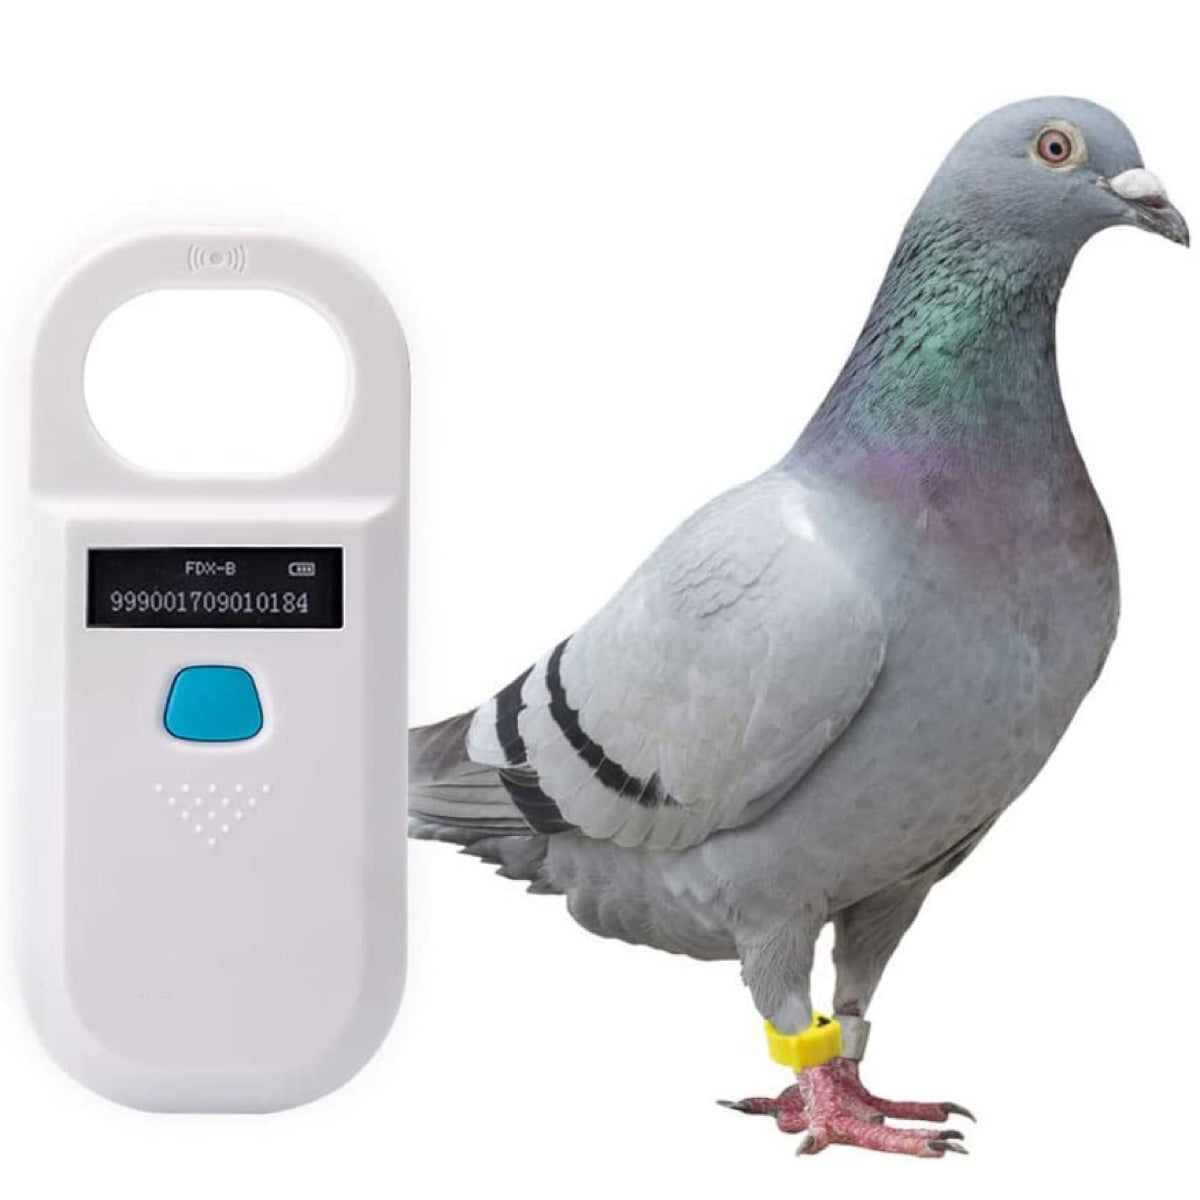 Pet Microchip Reader, RFID EMID Animal Handheld Reader